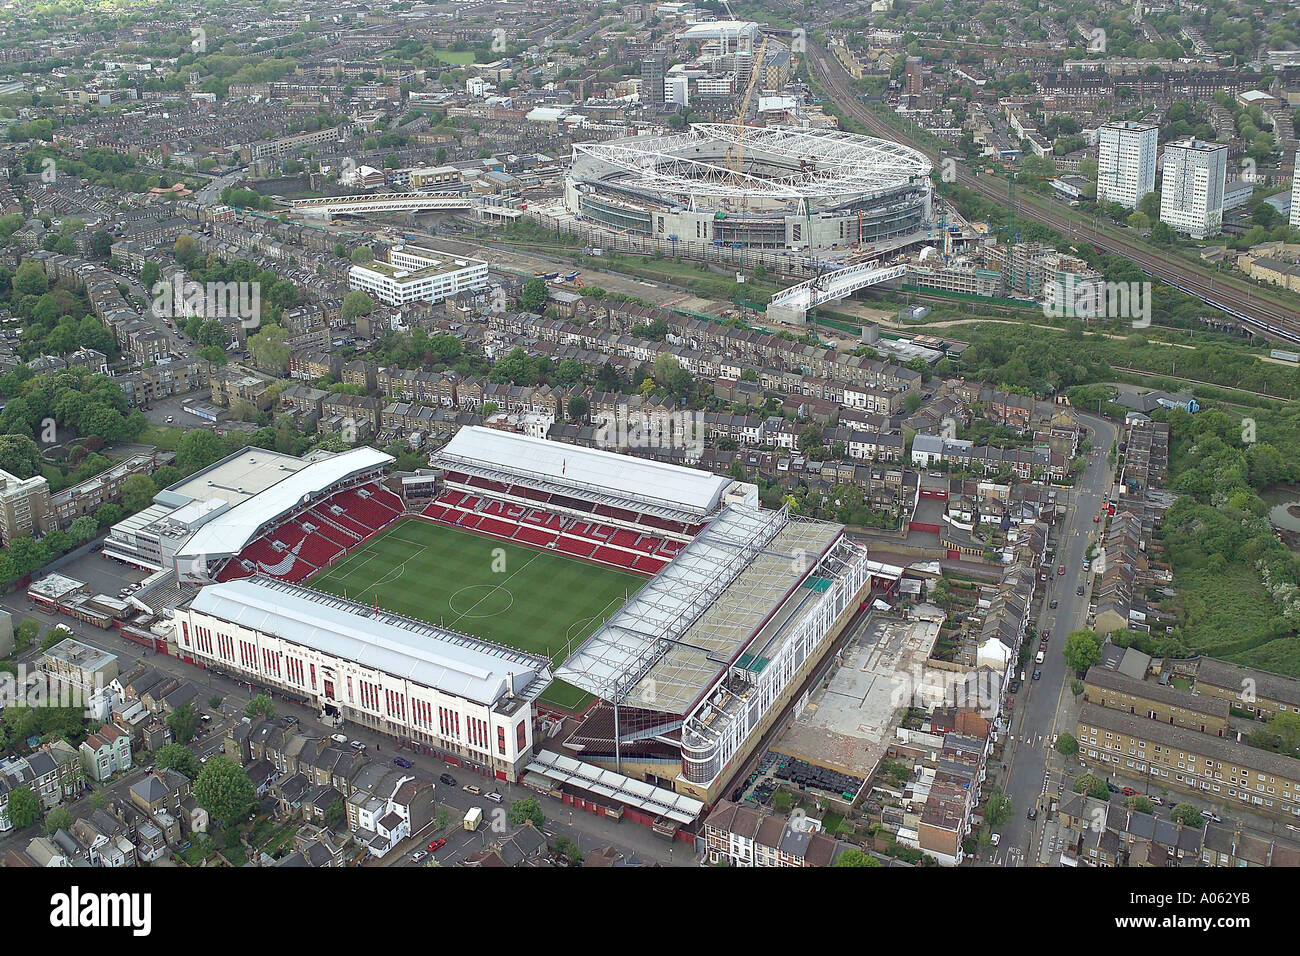 Vista aerea dell'Arsenal Football Club che mostra la Highbury Stadium e l'Emirates Stadium, casa dei Gunners o Gooners Foto Stock